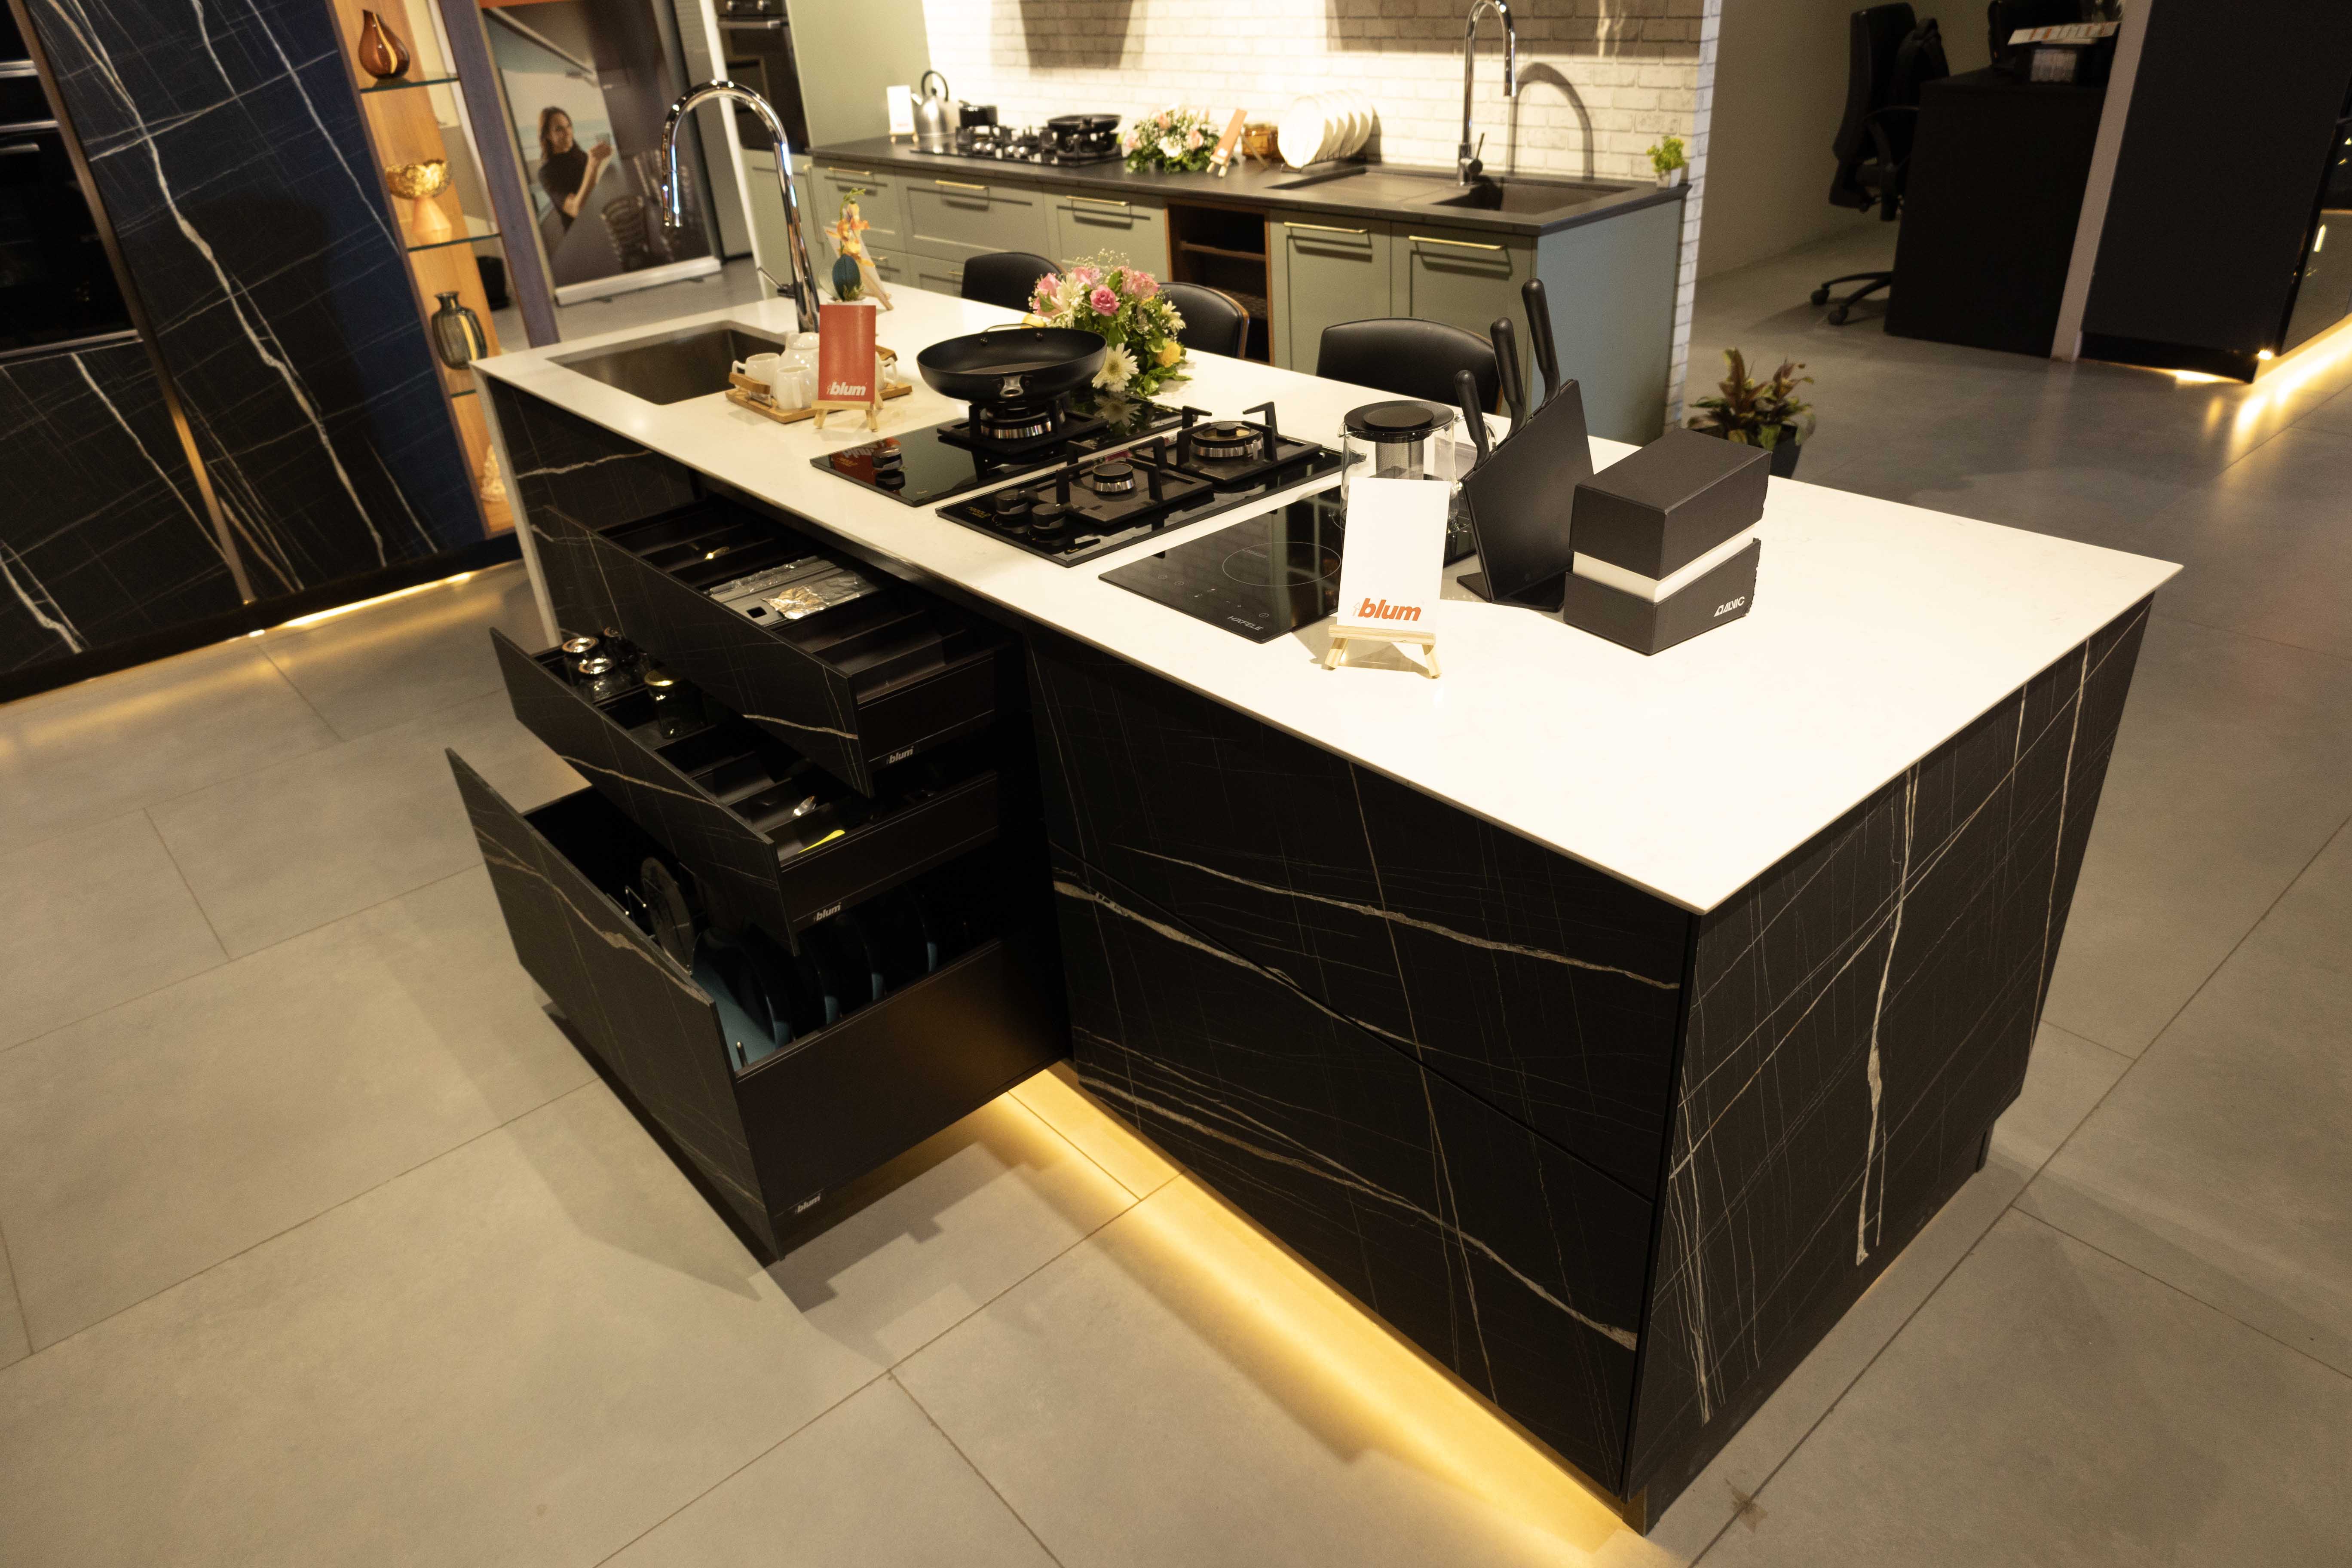 Blum Experience Centre - Kitchen countertop showcase